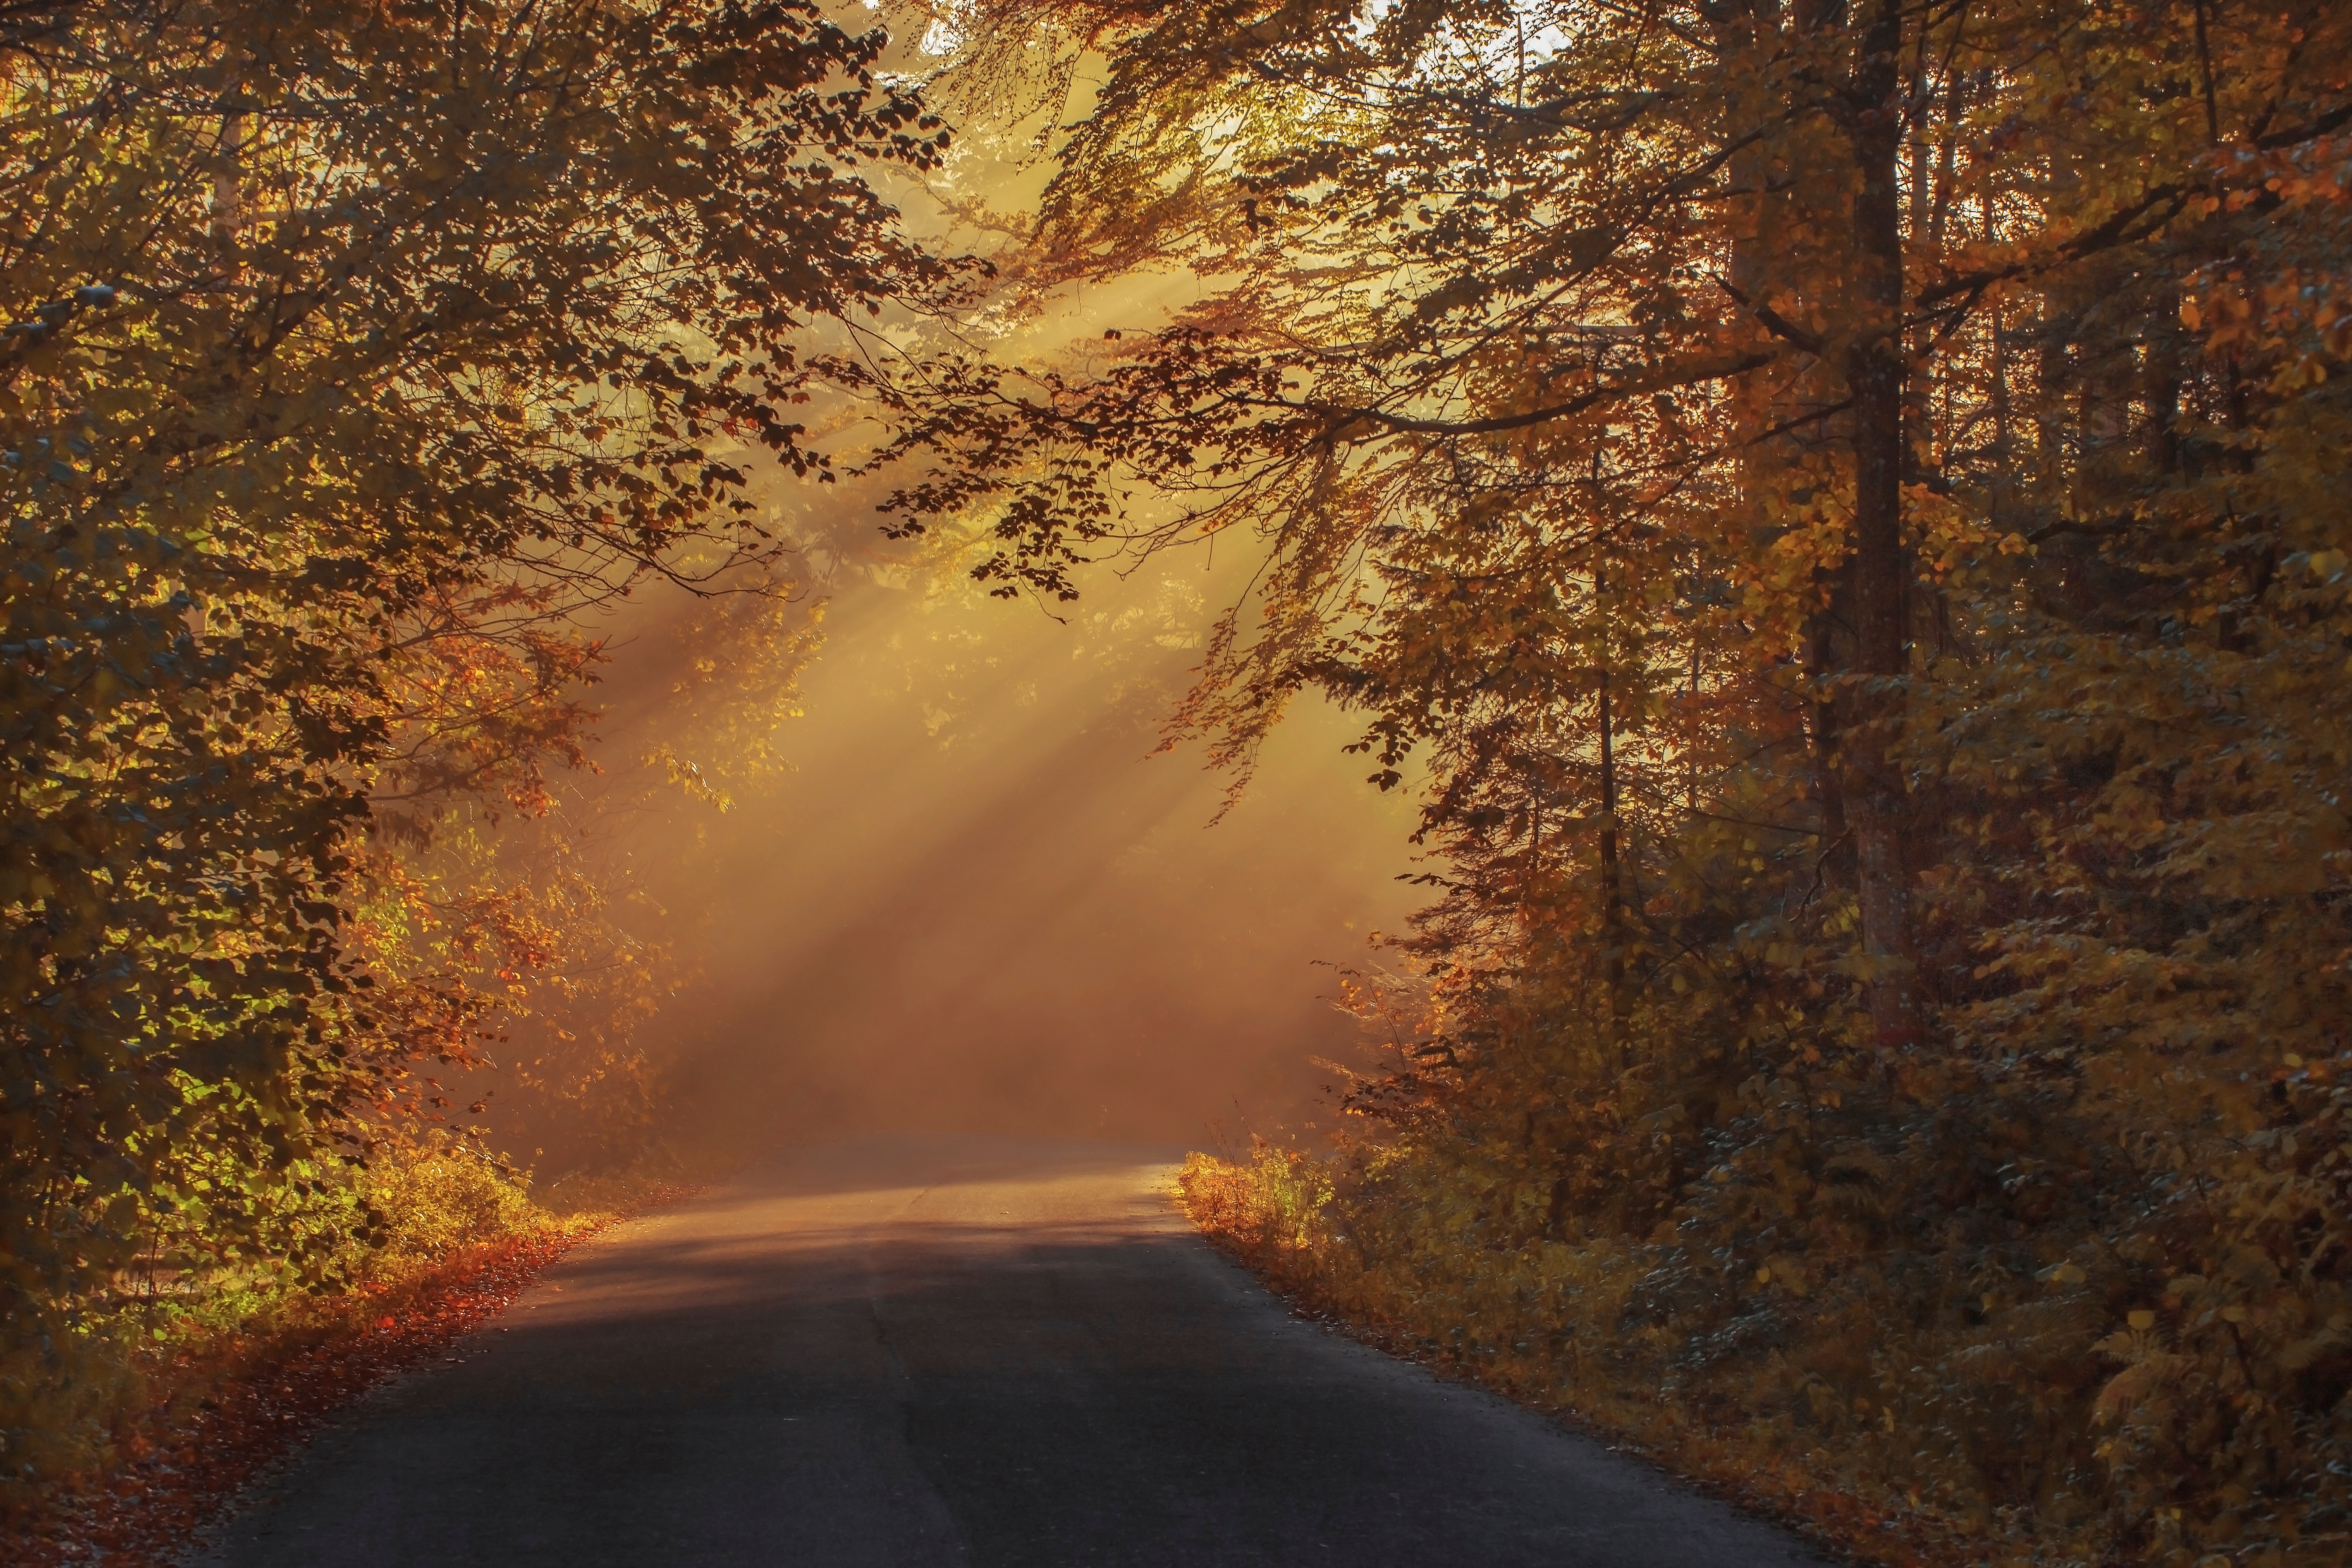 Gray Asphalt Road in Between Brown Orange Leaf Trees during Daytime, Autumnal, Rays, Wood, Water, HQ Photo